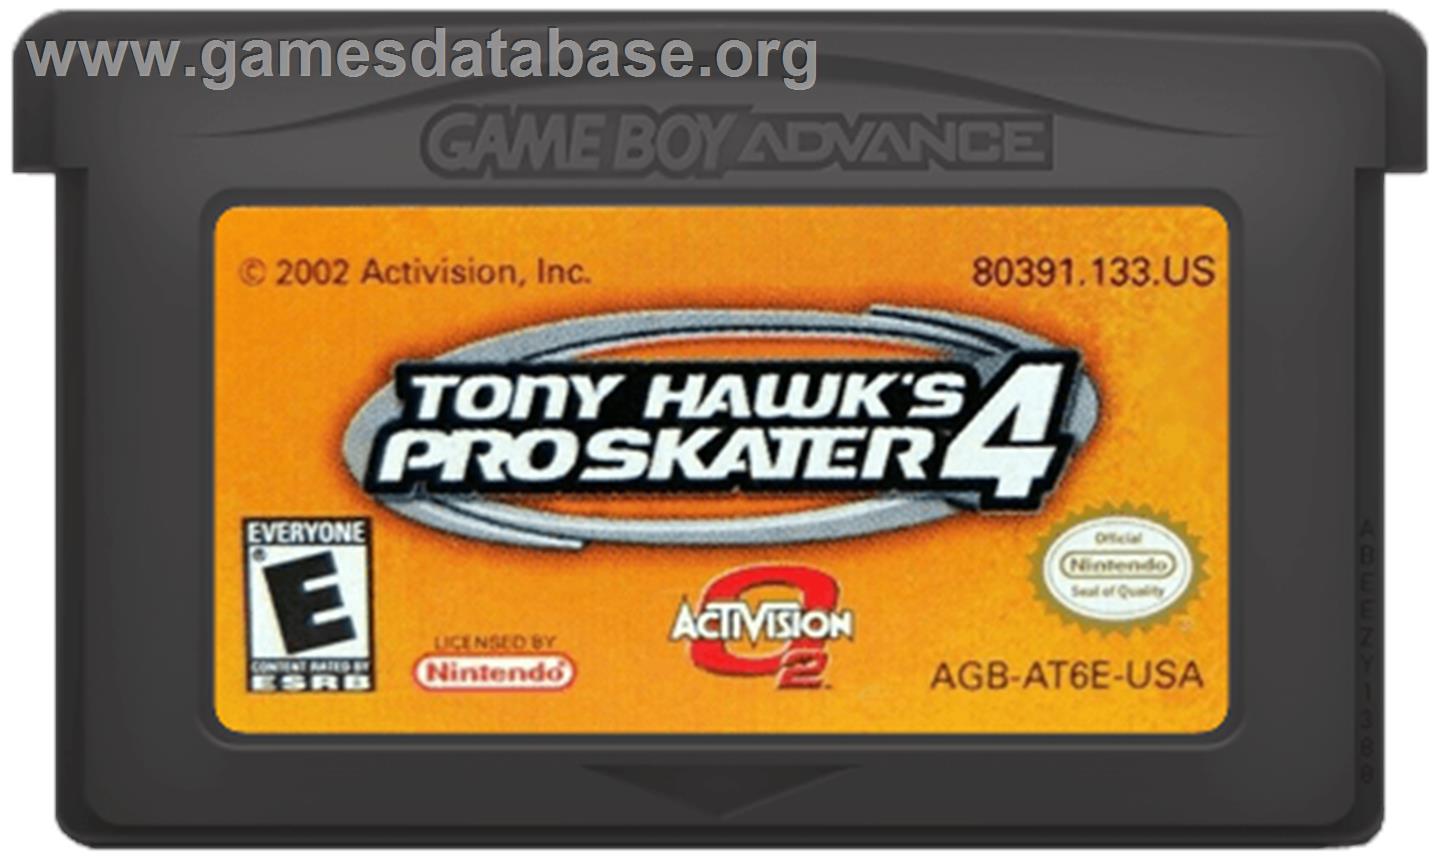 Tony Hawk's Pro Skater 4 - Nintendo Game Boy Advance - Artwork - Cartridge